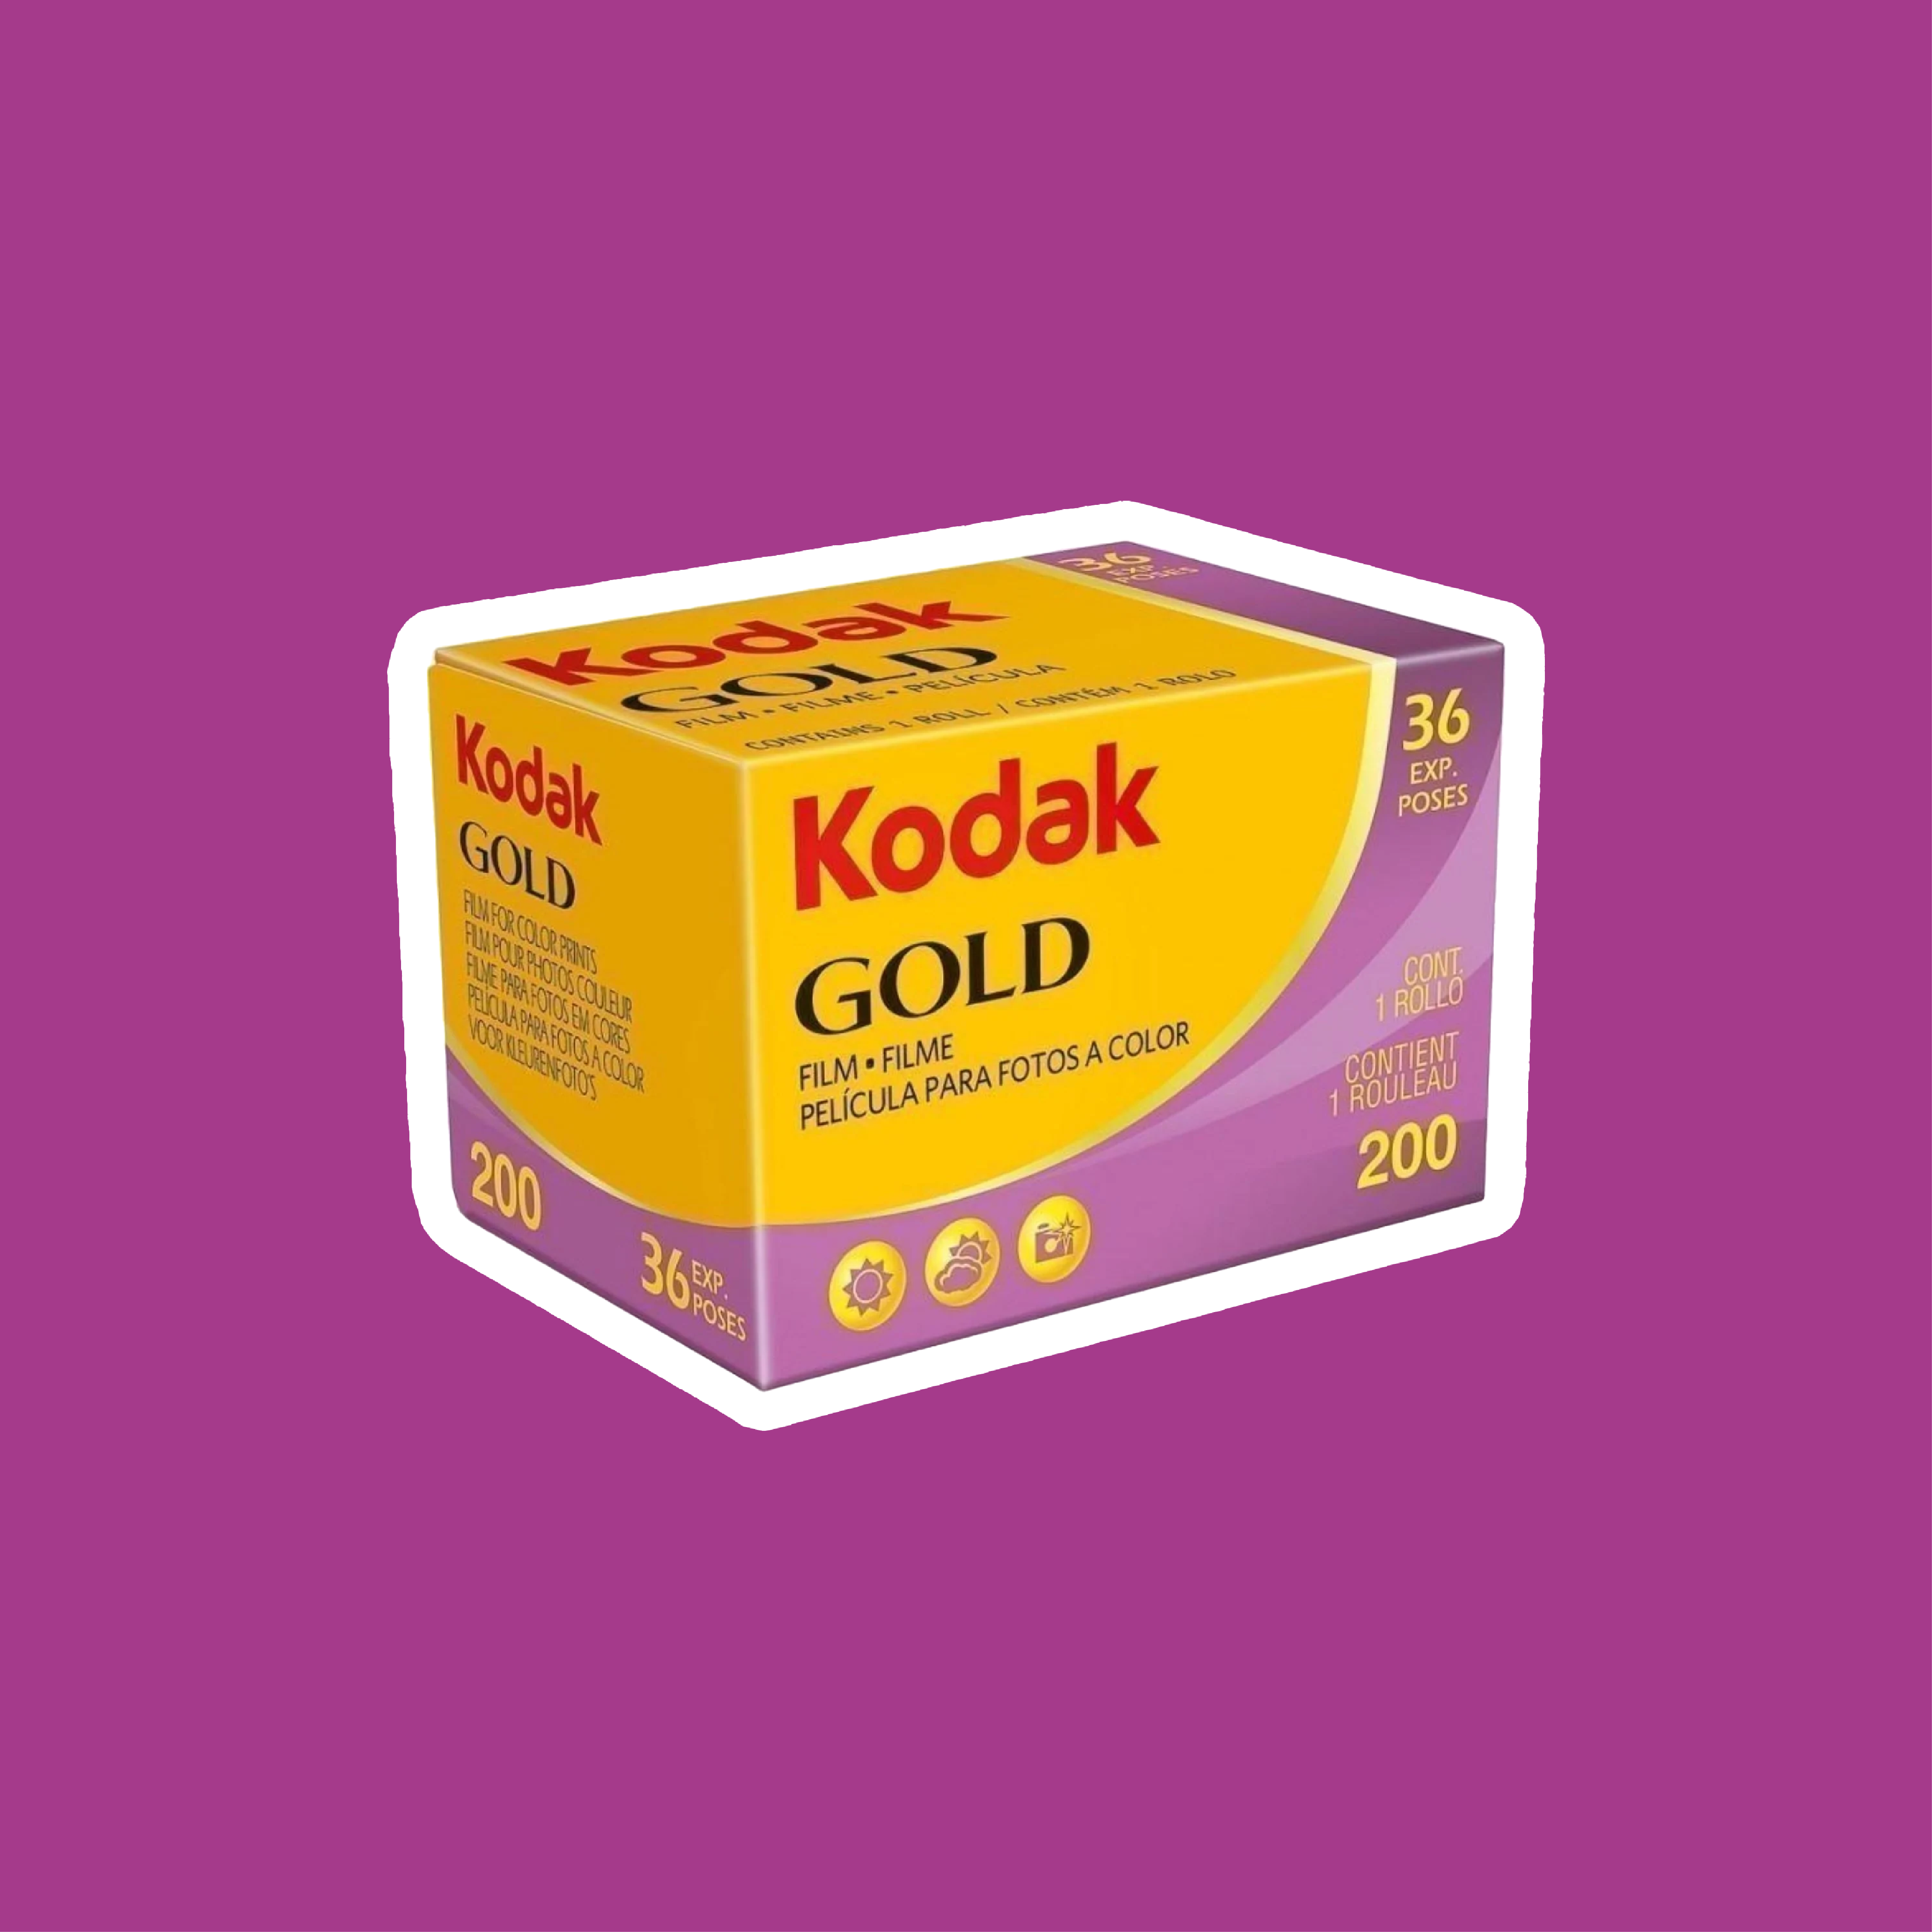 【新品】Kodak professional GOLD200 1箱(5本)